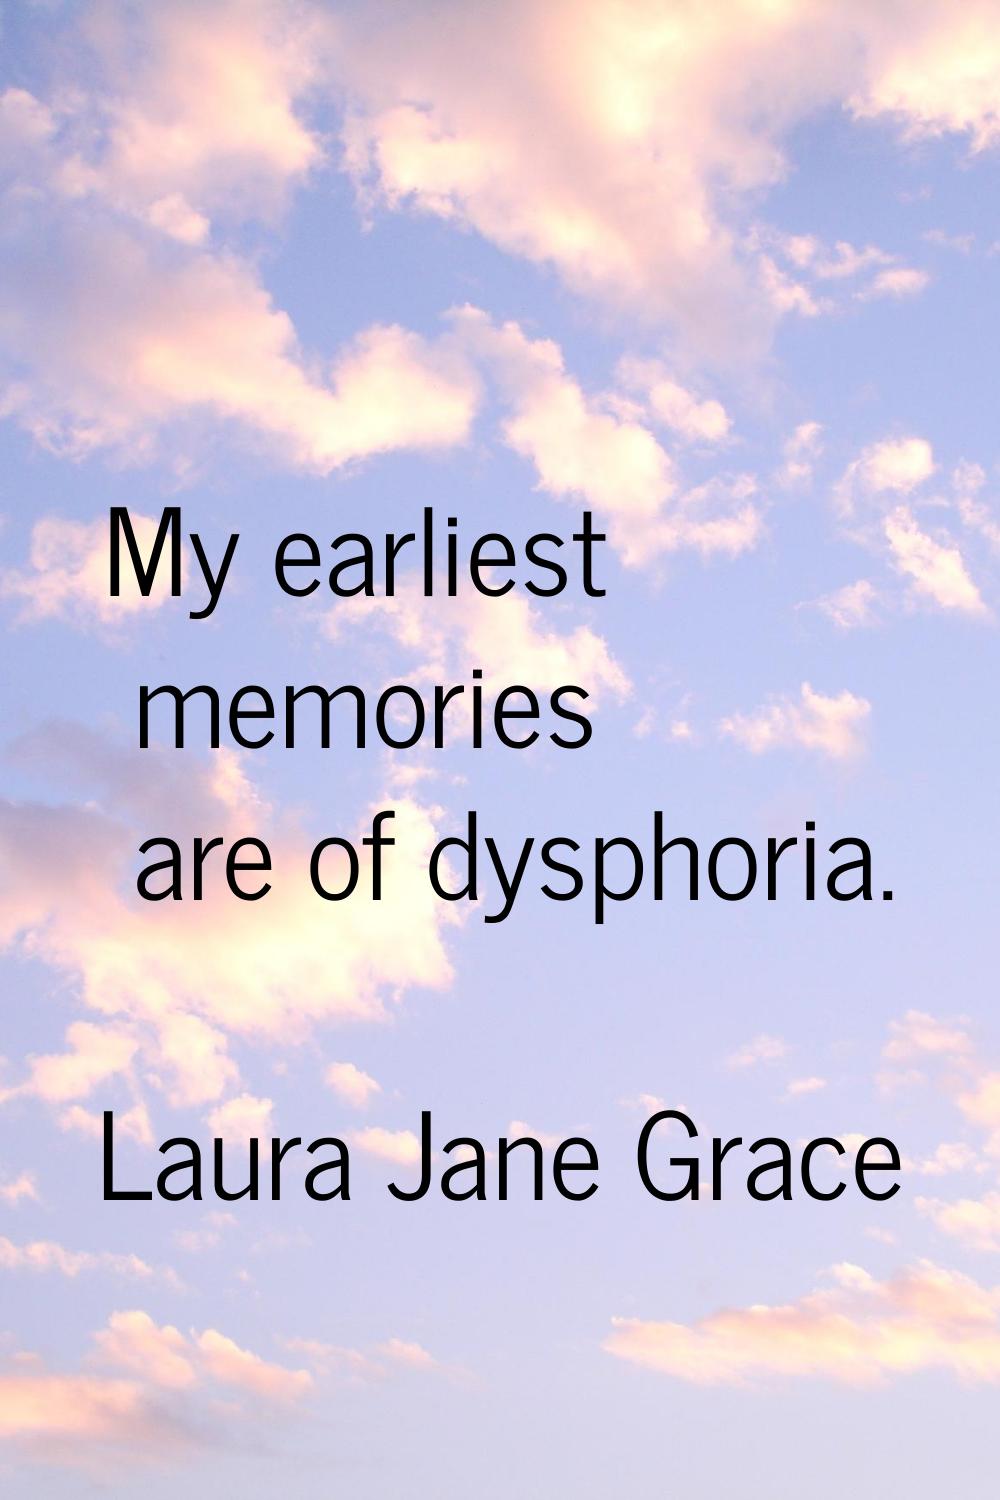 My earliest memories are of dysphoria.